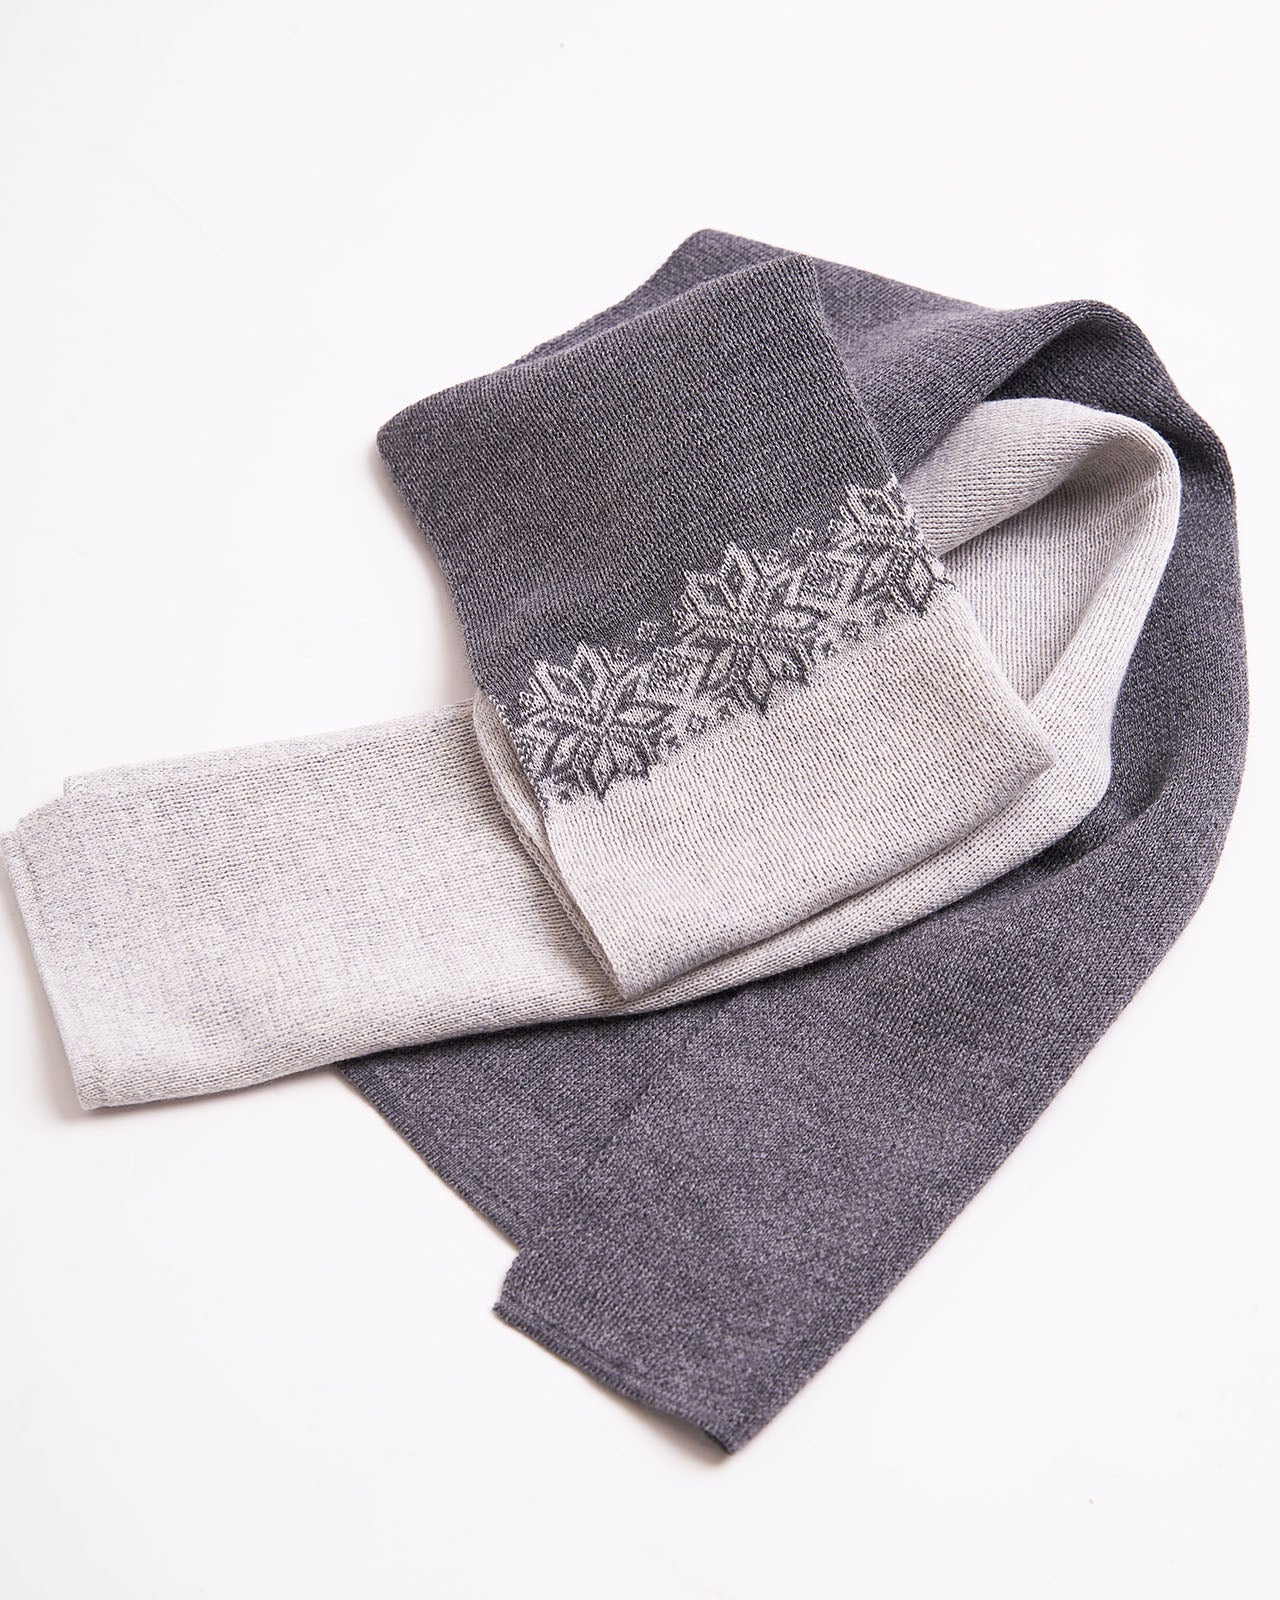 Soft merino wool scarf